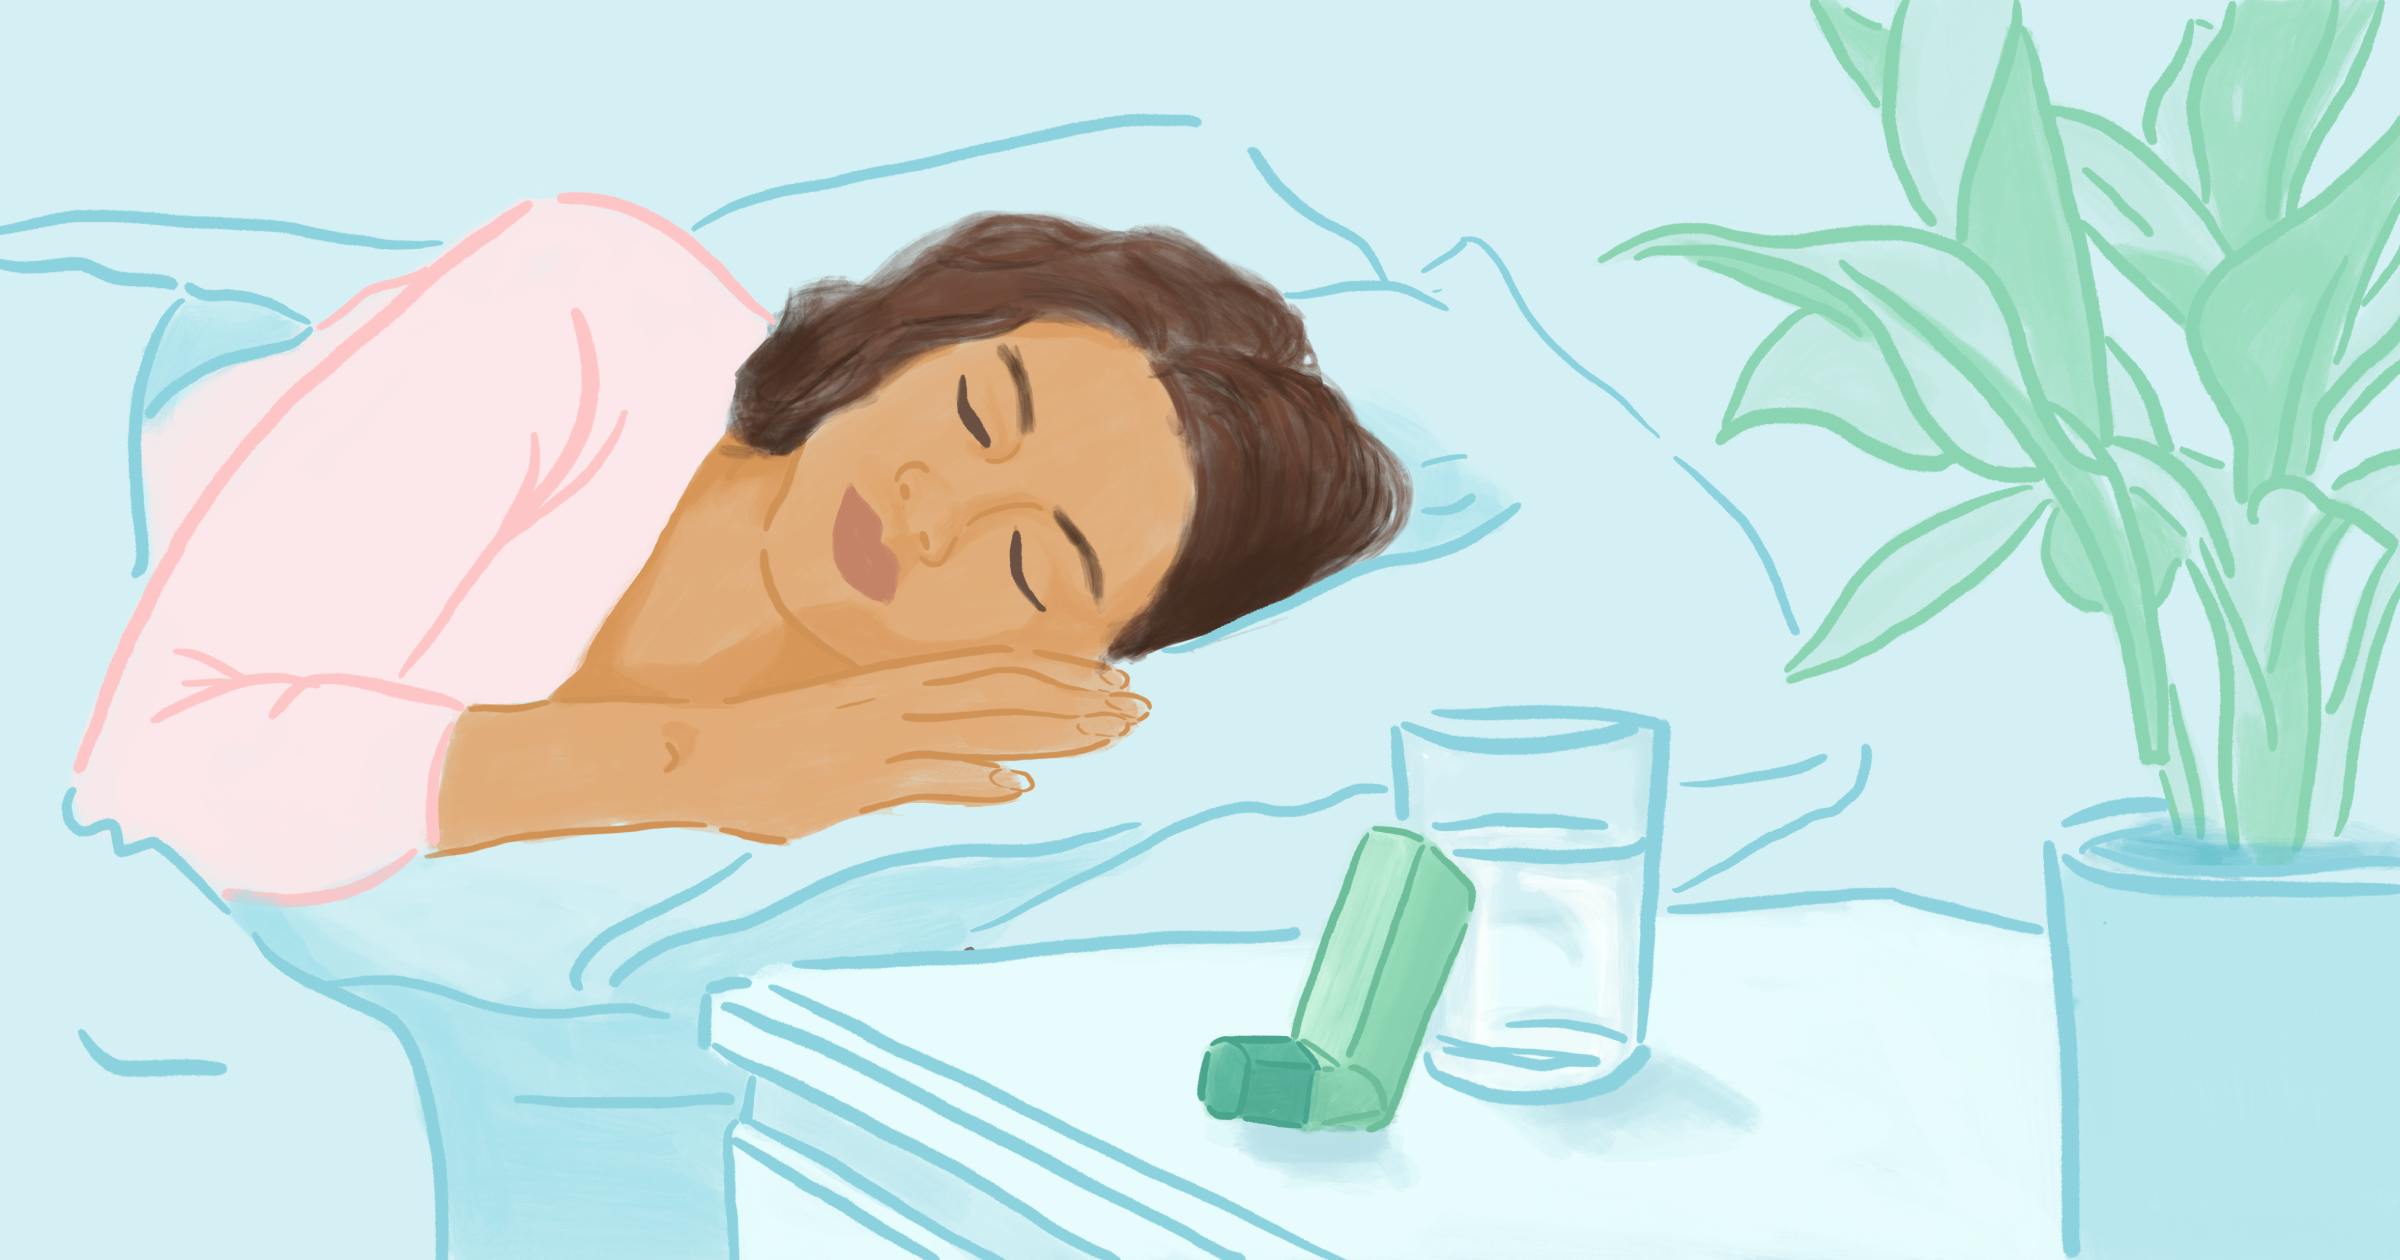 Woman sleeping; asthma inhaler on bedside